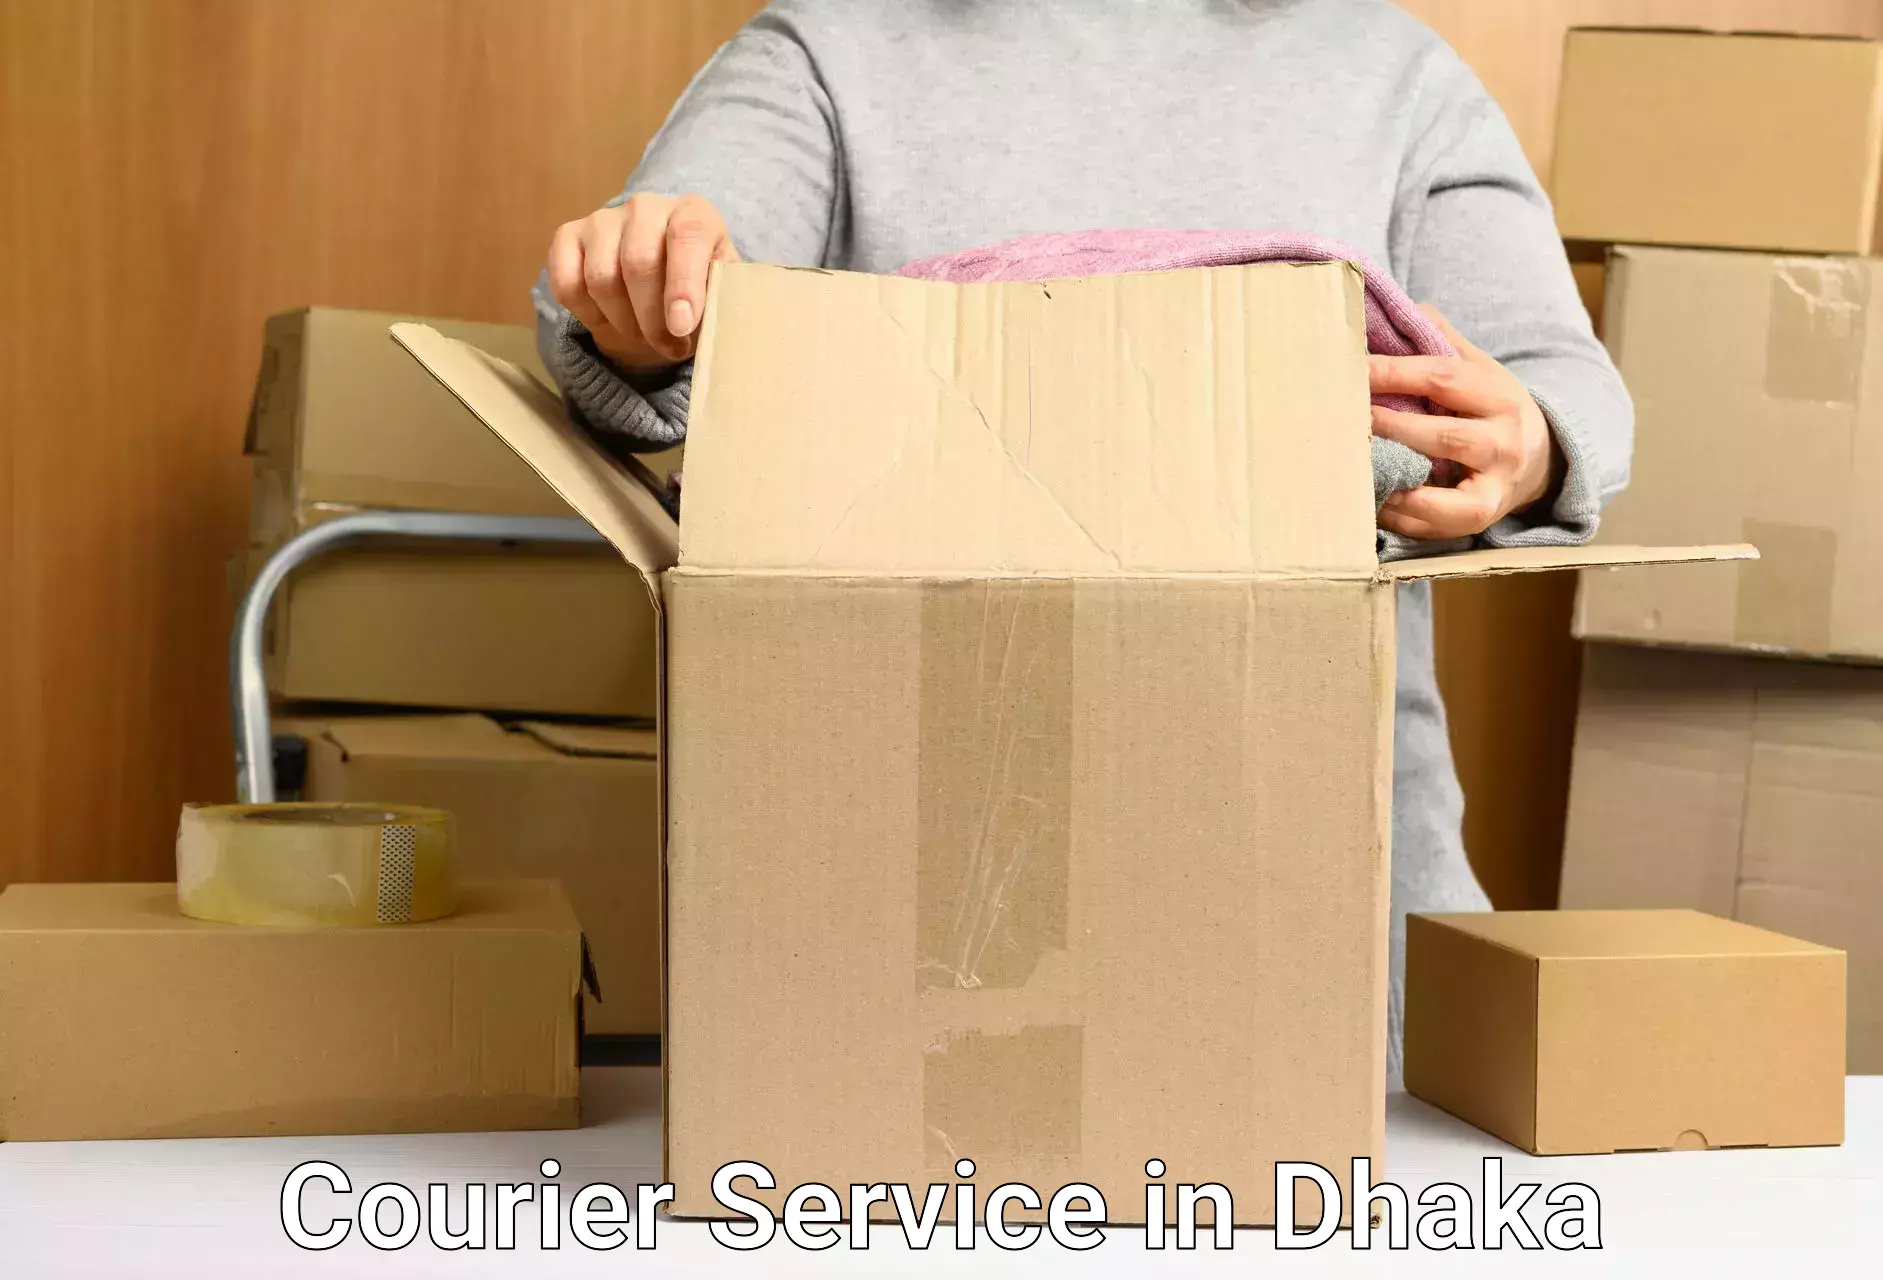 E-commerce logistics support in Dhaka